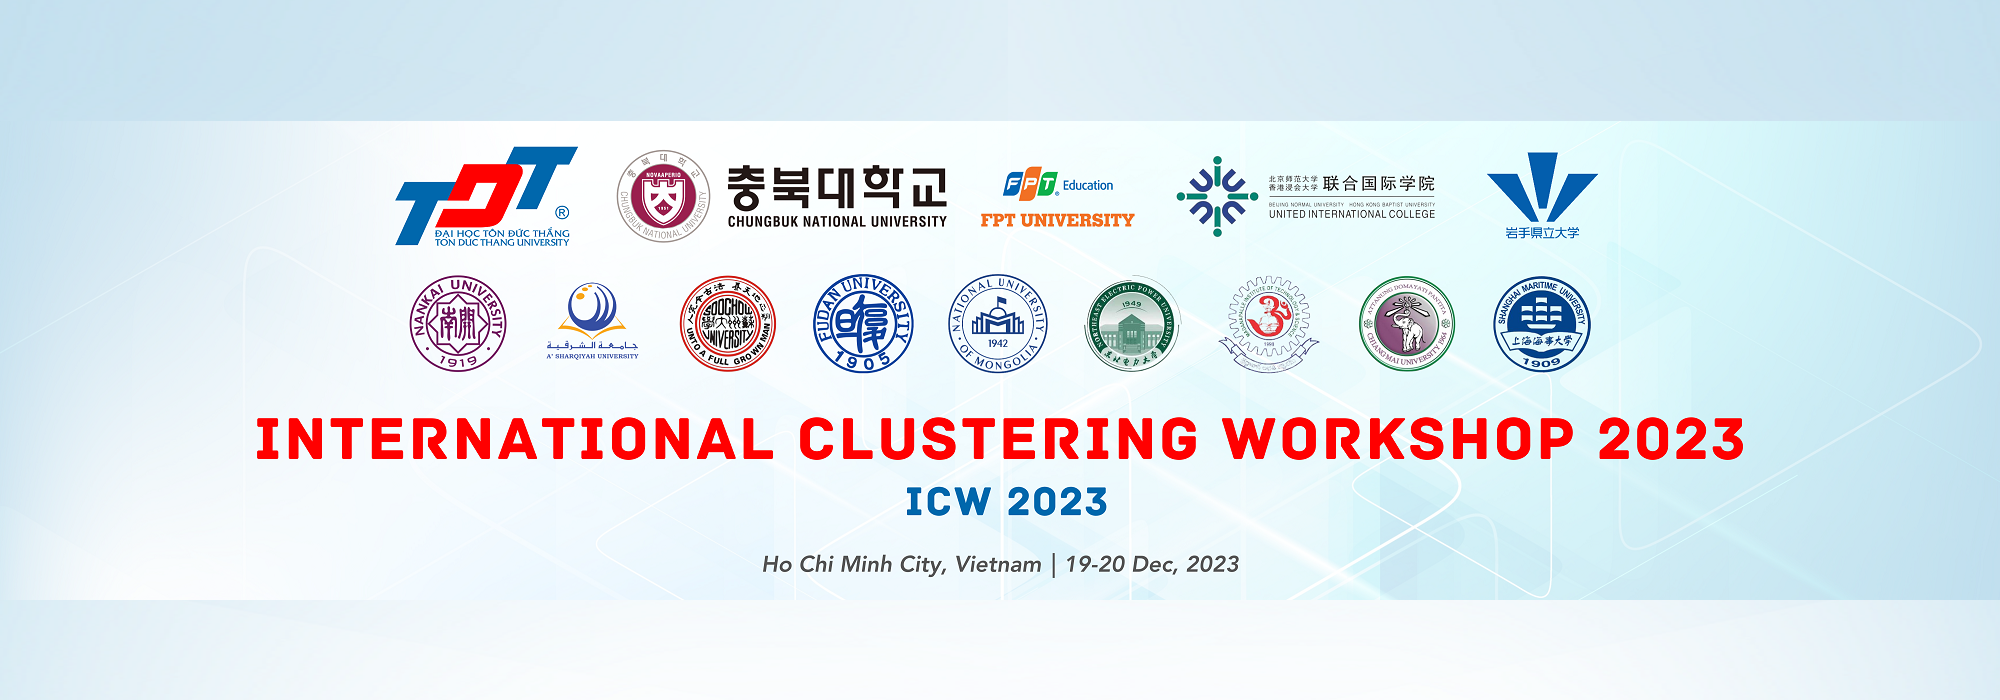 INTERNATIONAL CLUSTERING WORKSHOP 2023